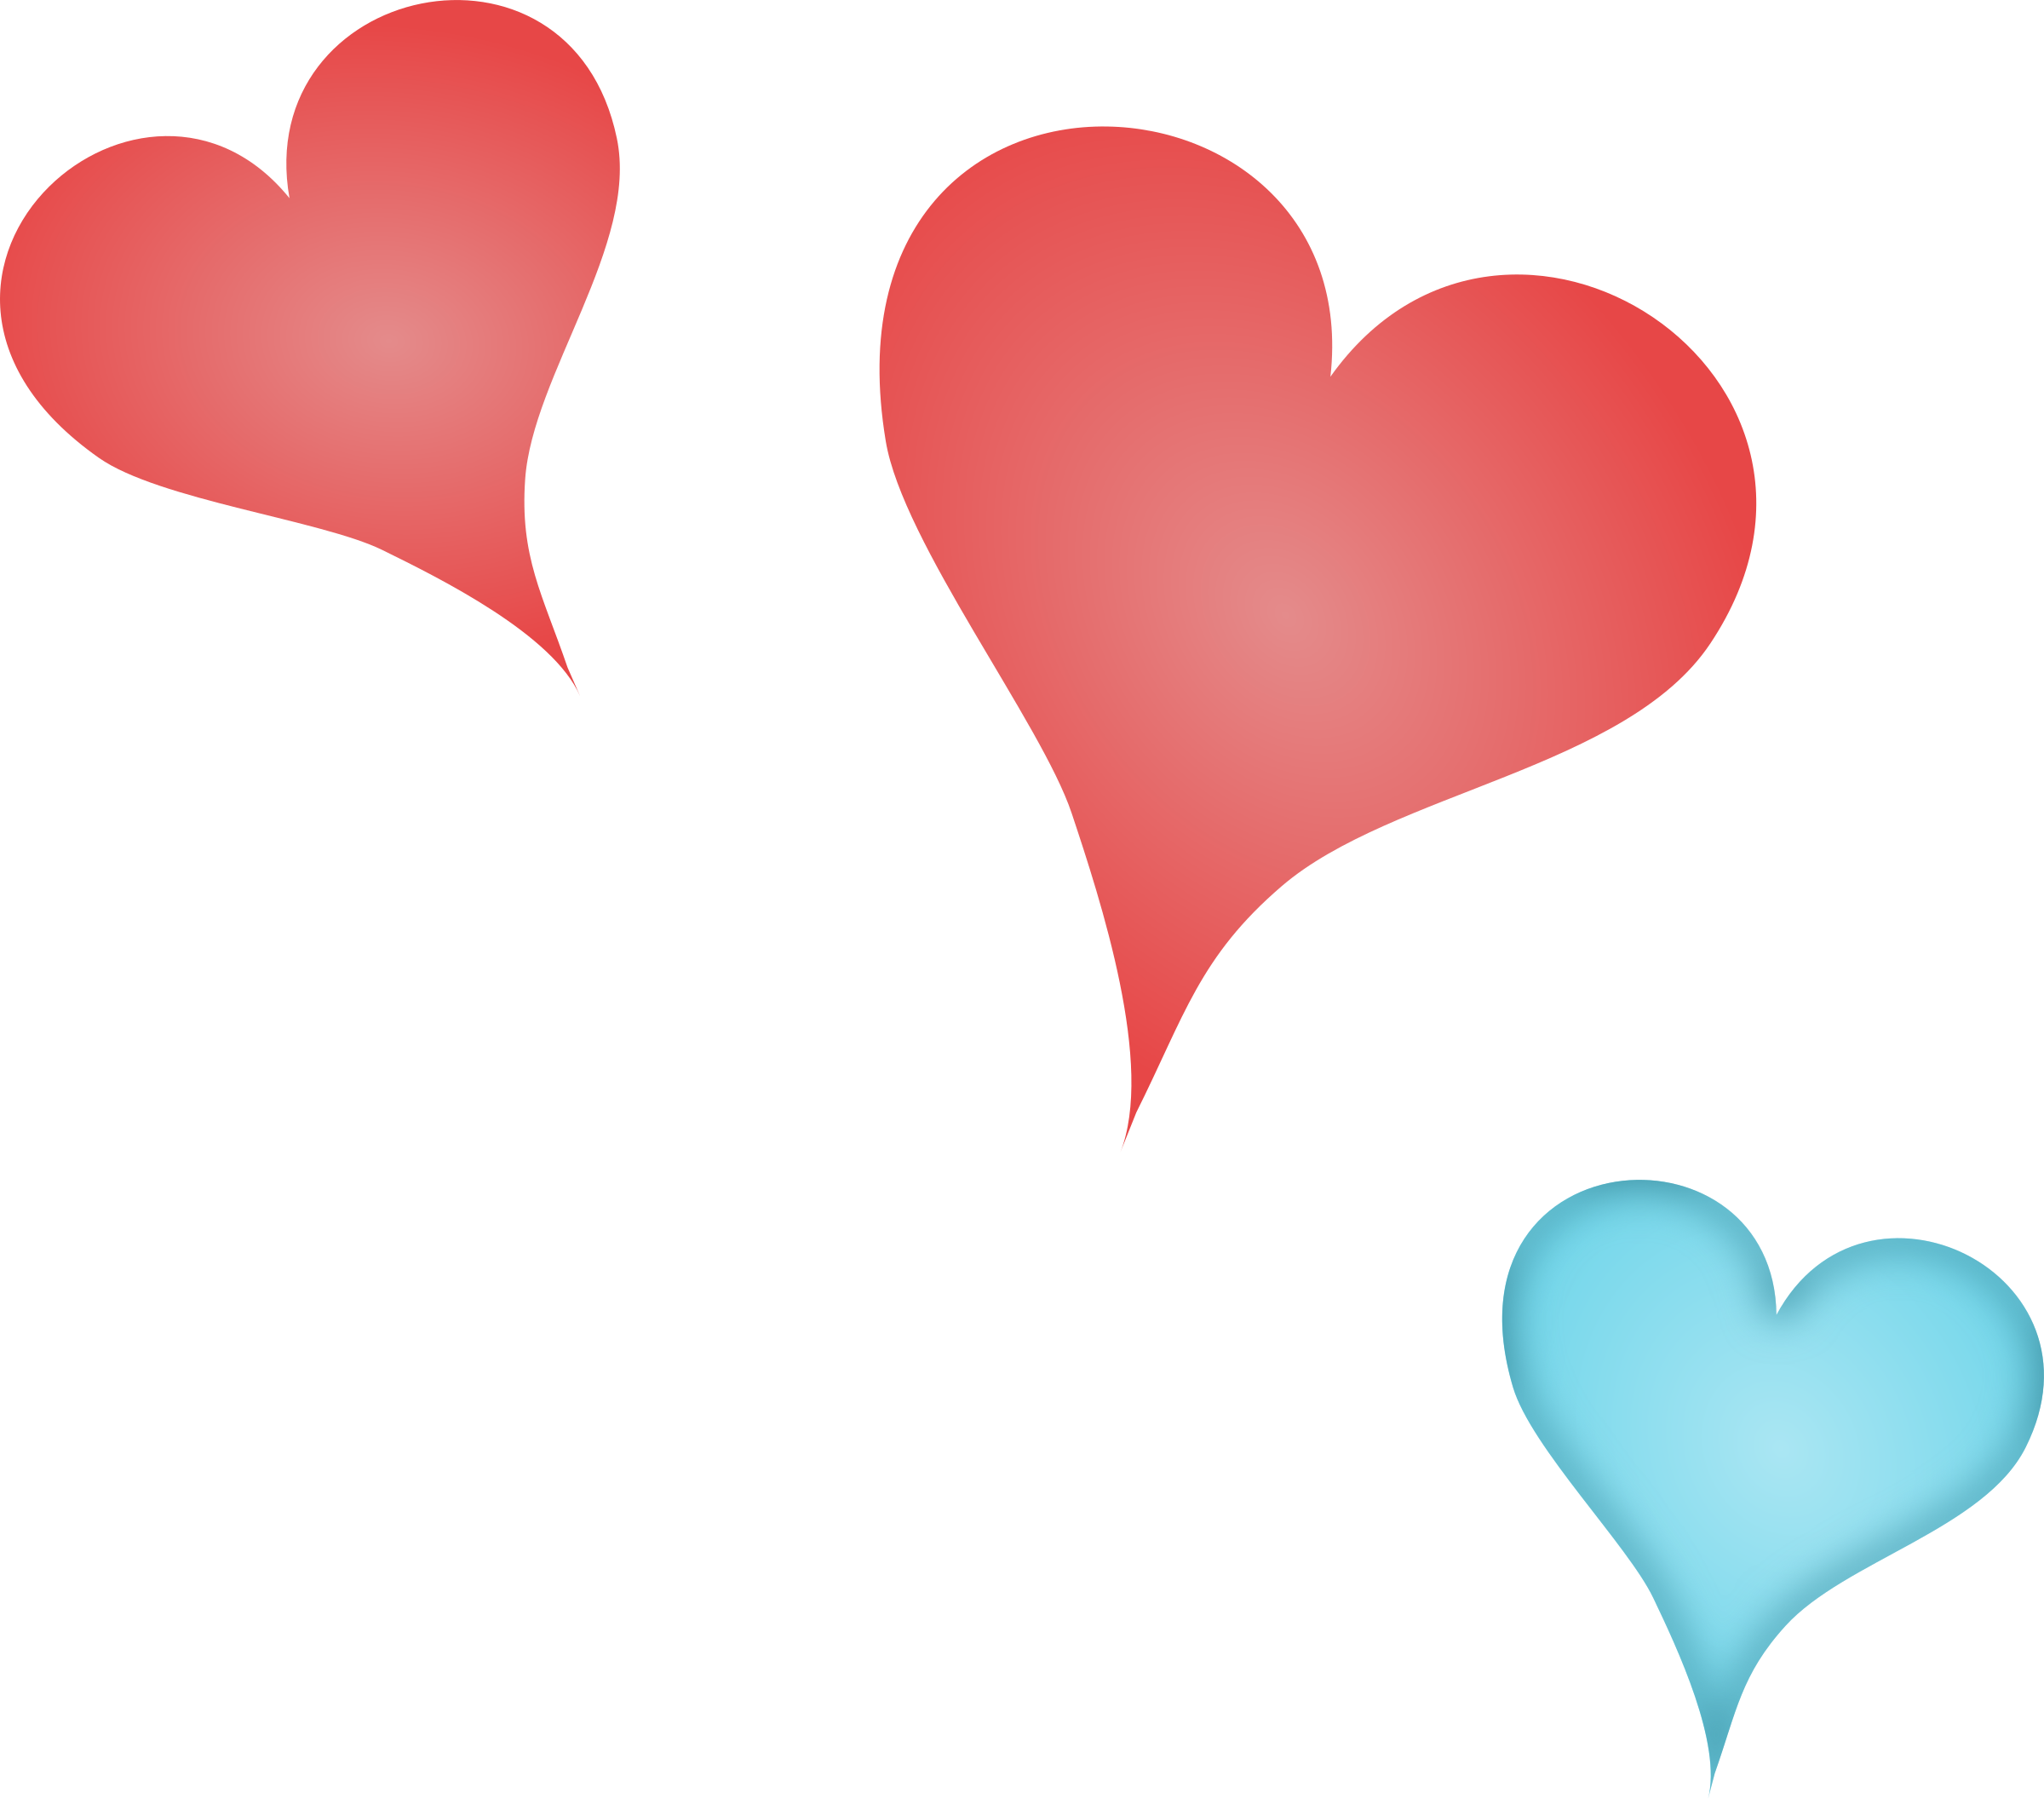 3 hearts SVG Clip arts